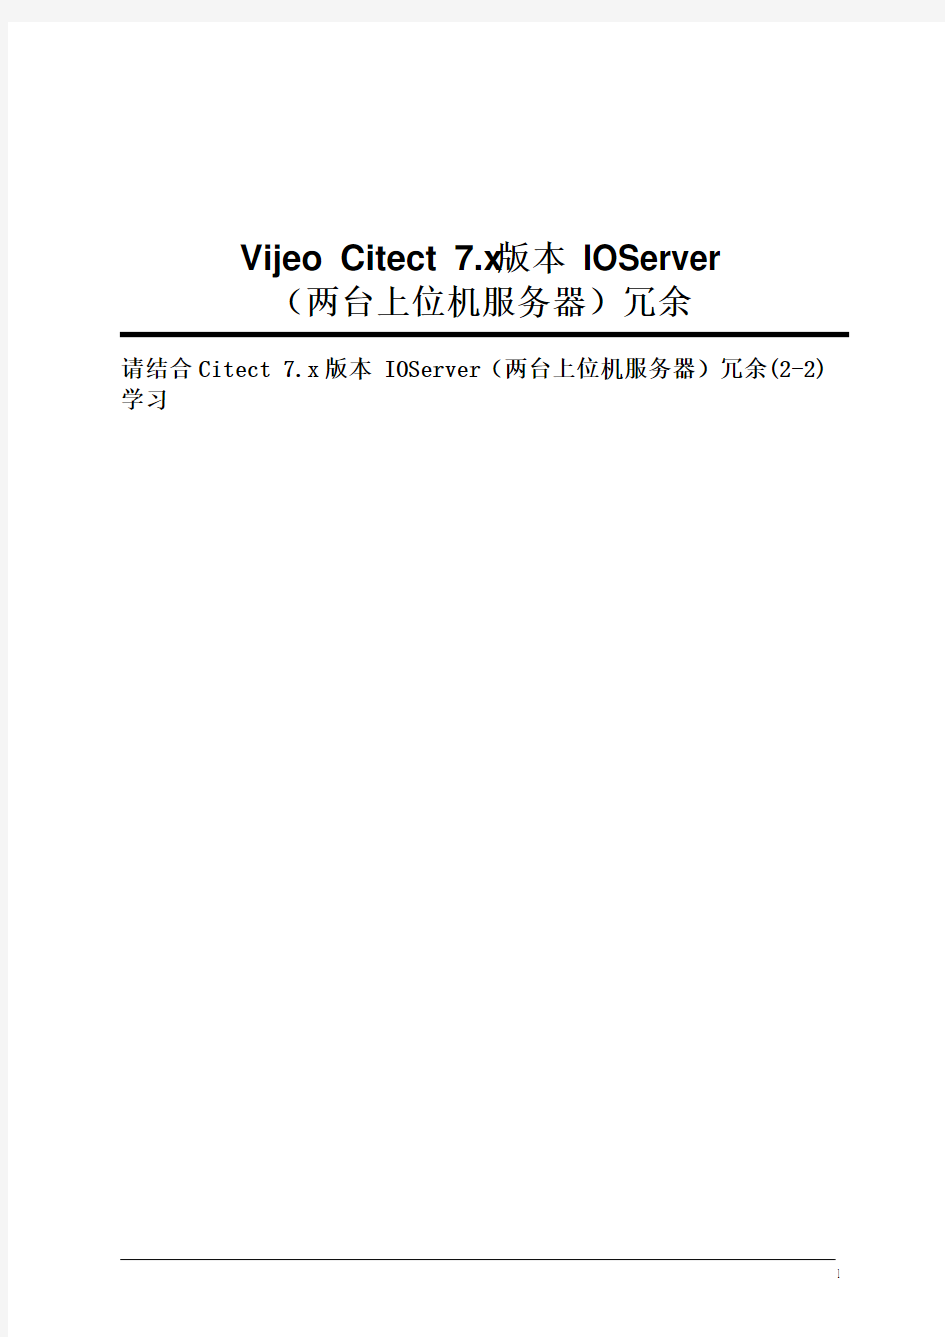 Citect_V7.x版本IOServer(两台上位机服务器)冗余(2-1)